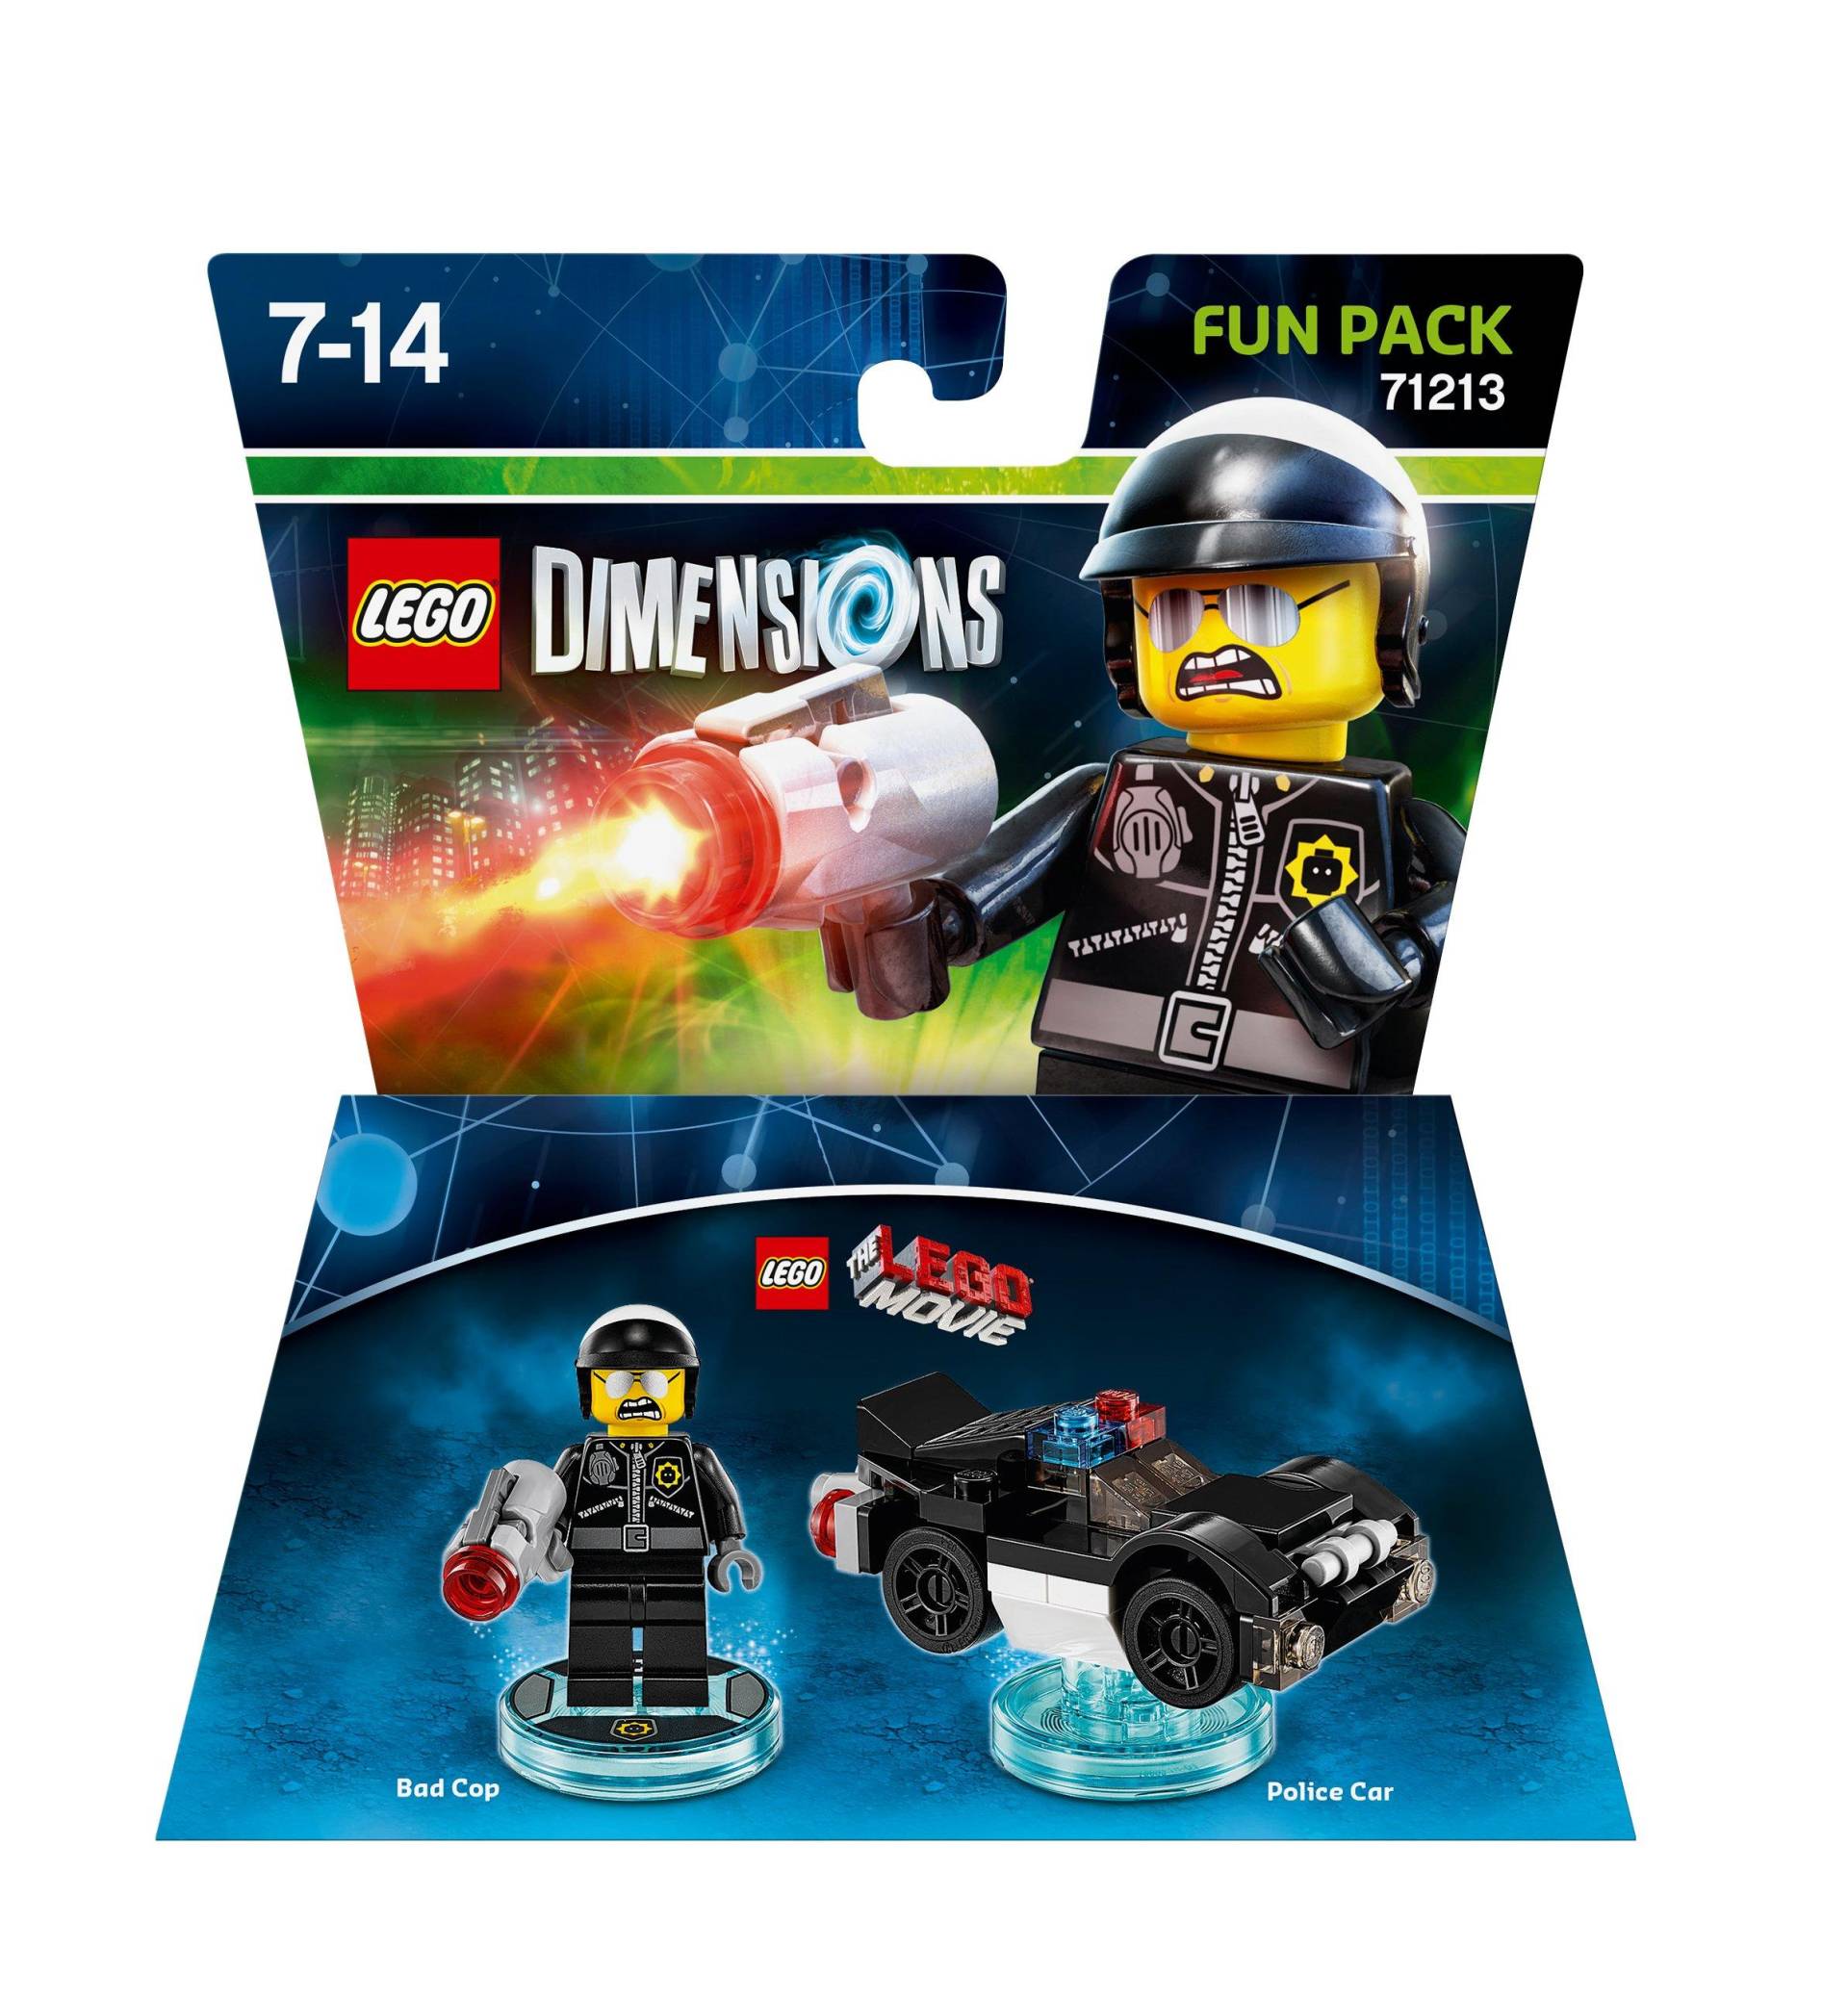 LEGO Dimensions Fun Pack Lego Movie Bad Cop, PS4, PS3, Xbox One, Xbox 360, Wii U, de/fr/en von ABC Design